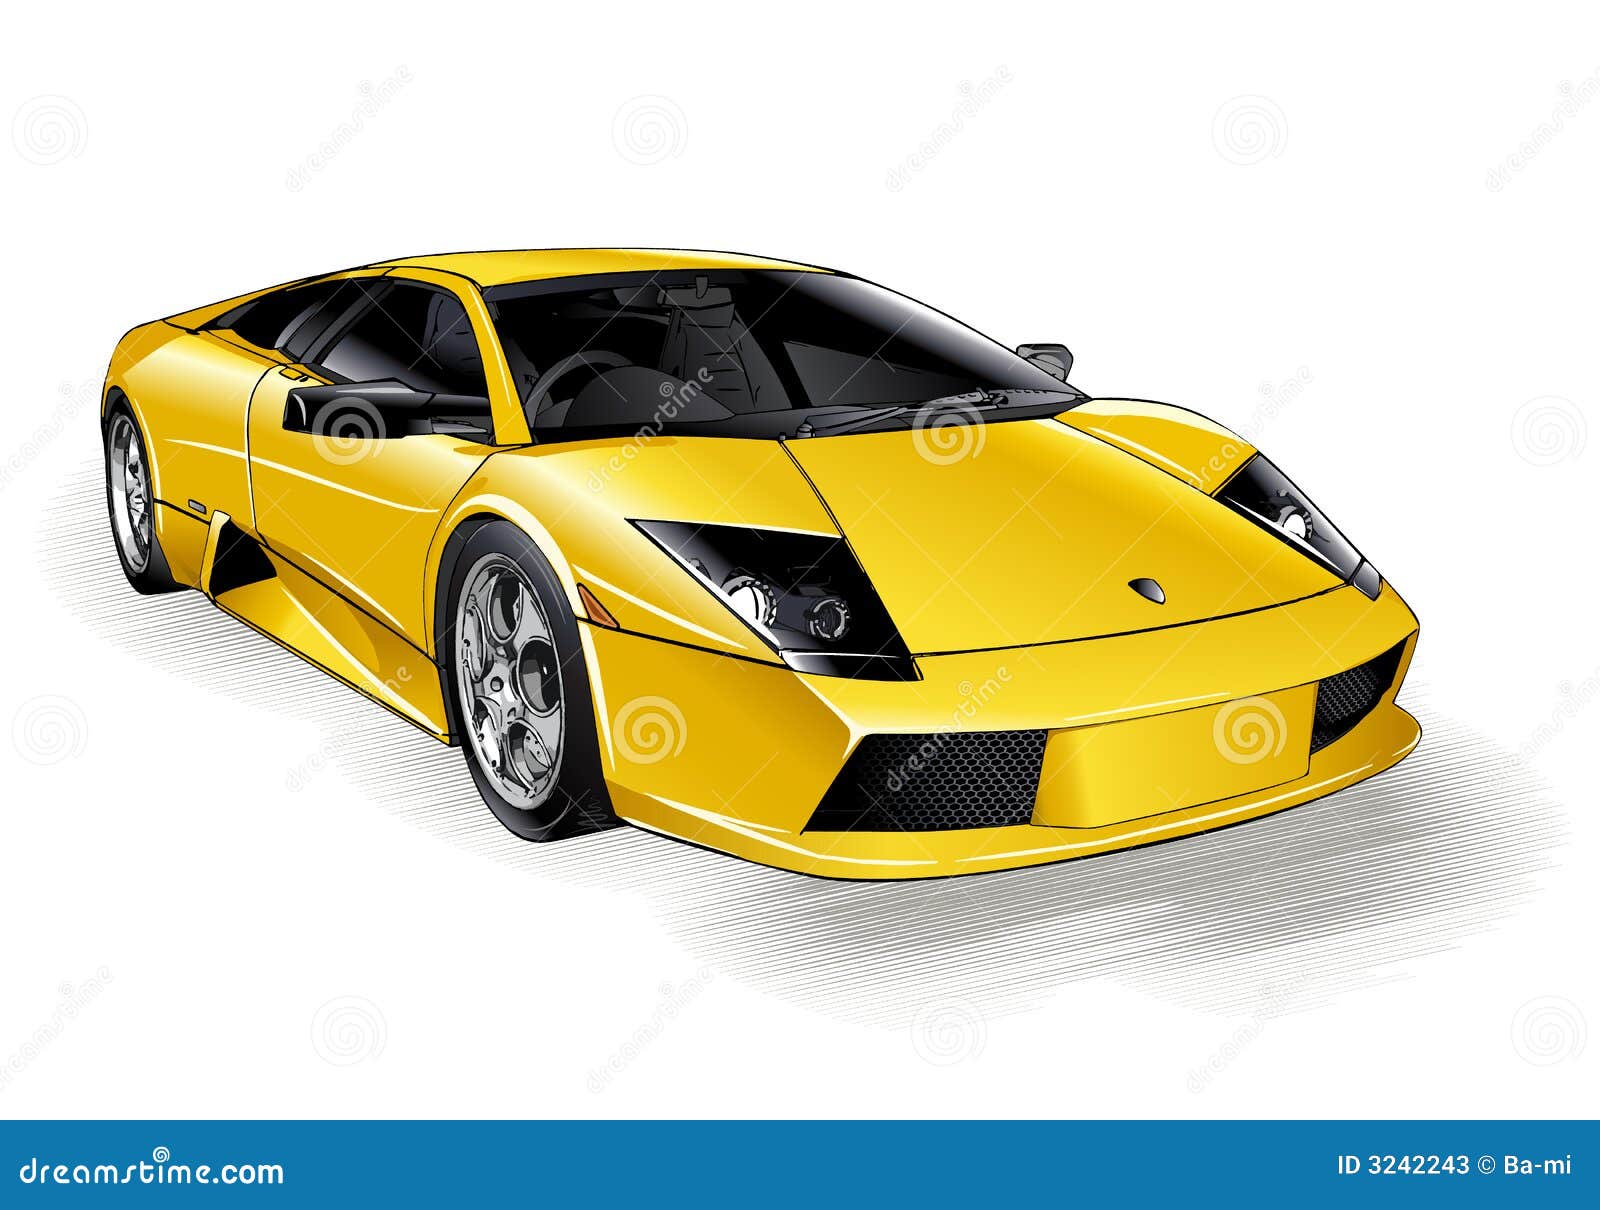 Lamborghini Stock Photos - Image: 3242243